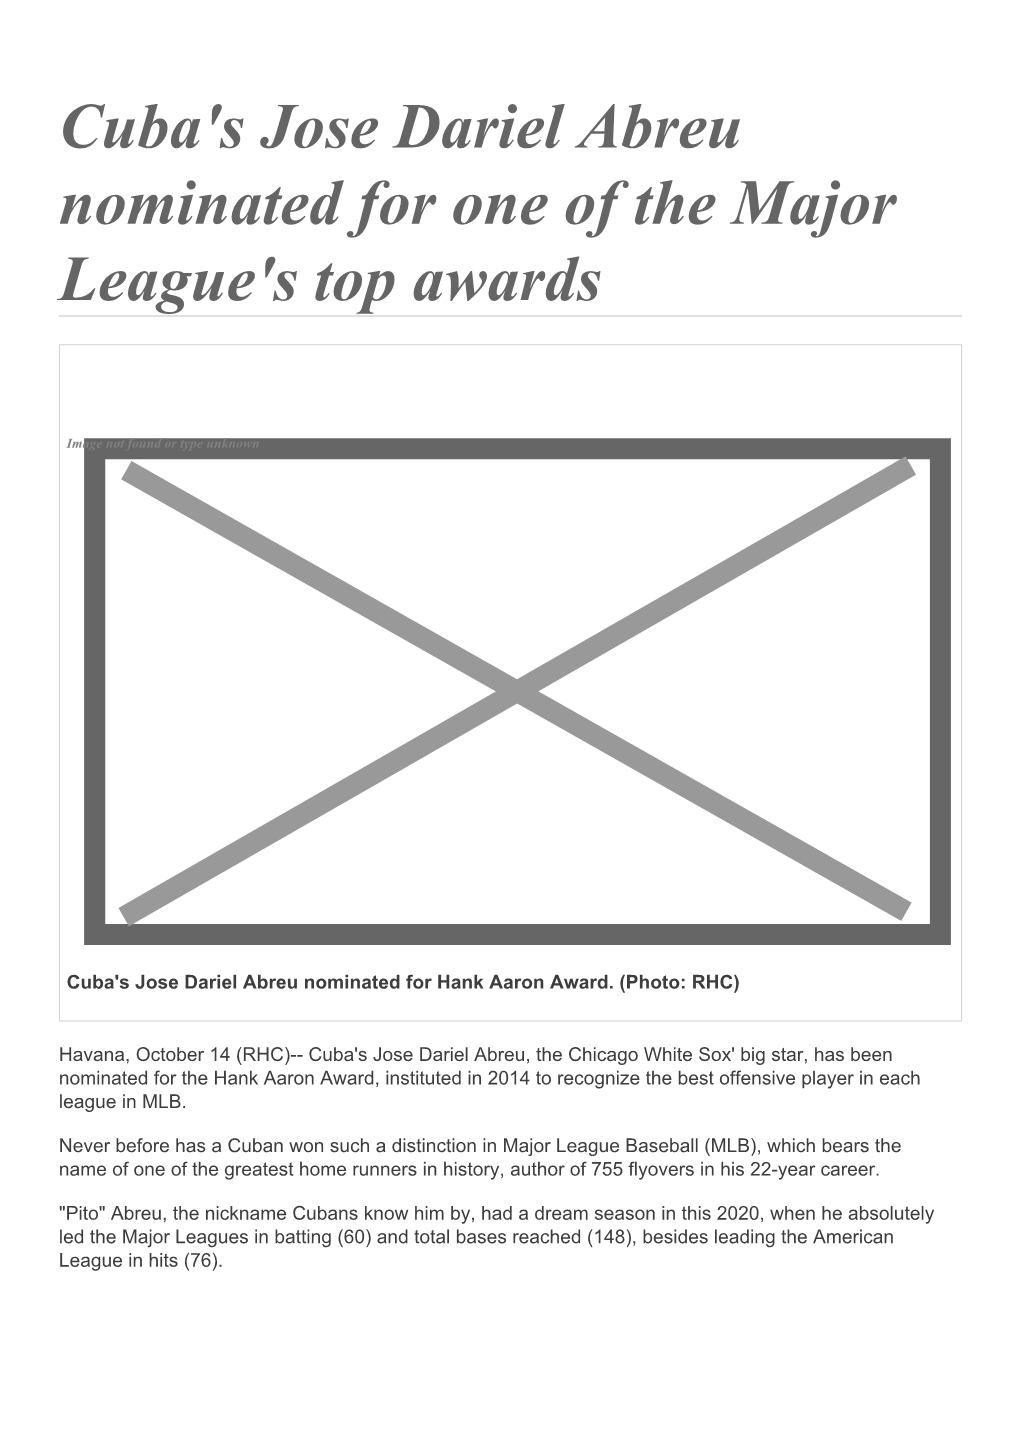 Cuba's Jose Dariel Abreu Nominated for One of the Major League's Top Awards